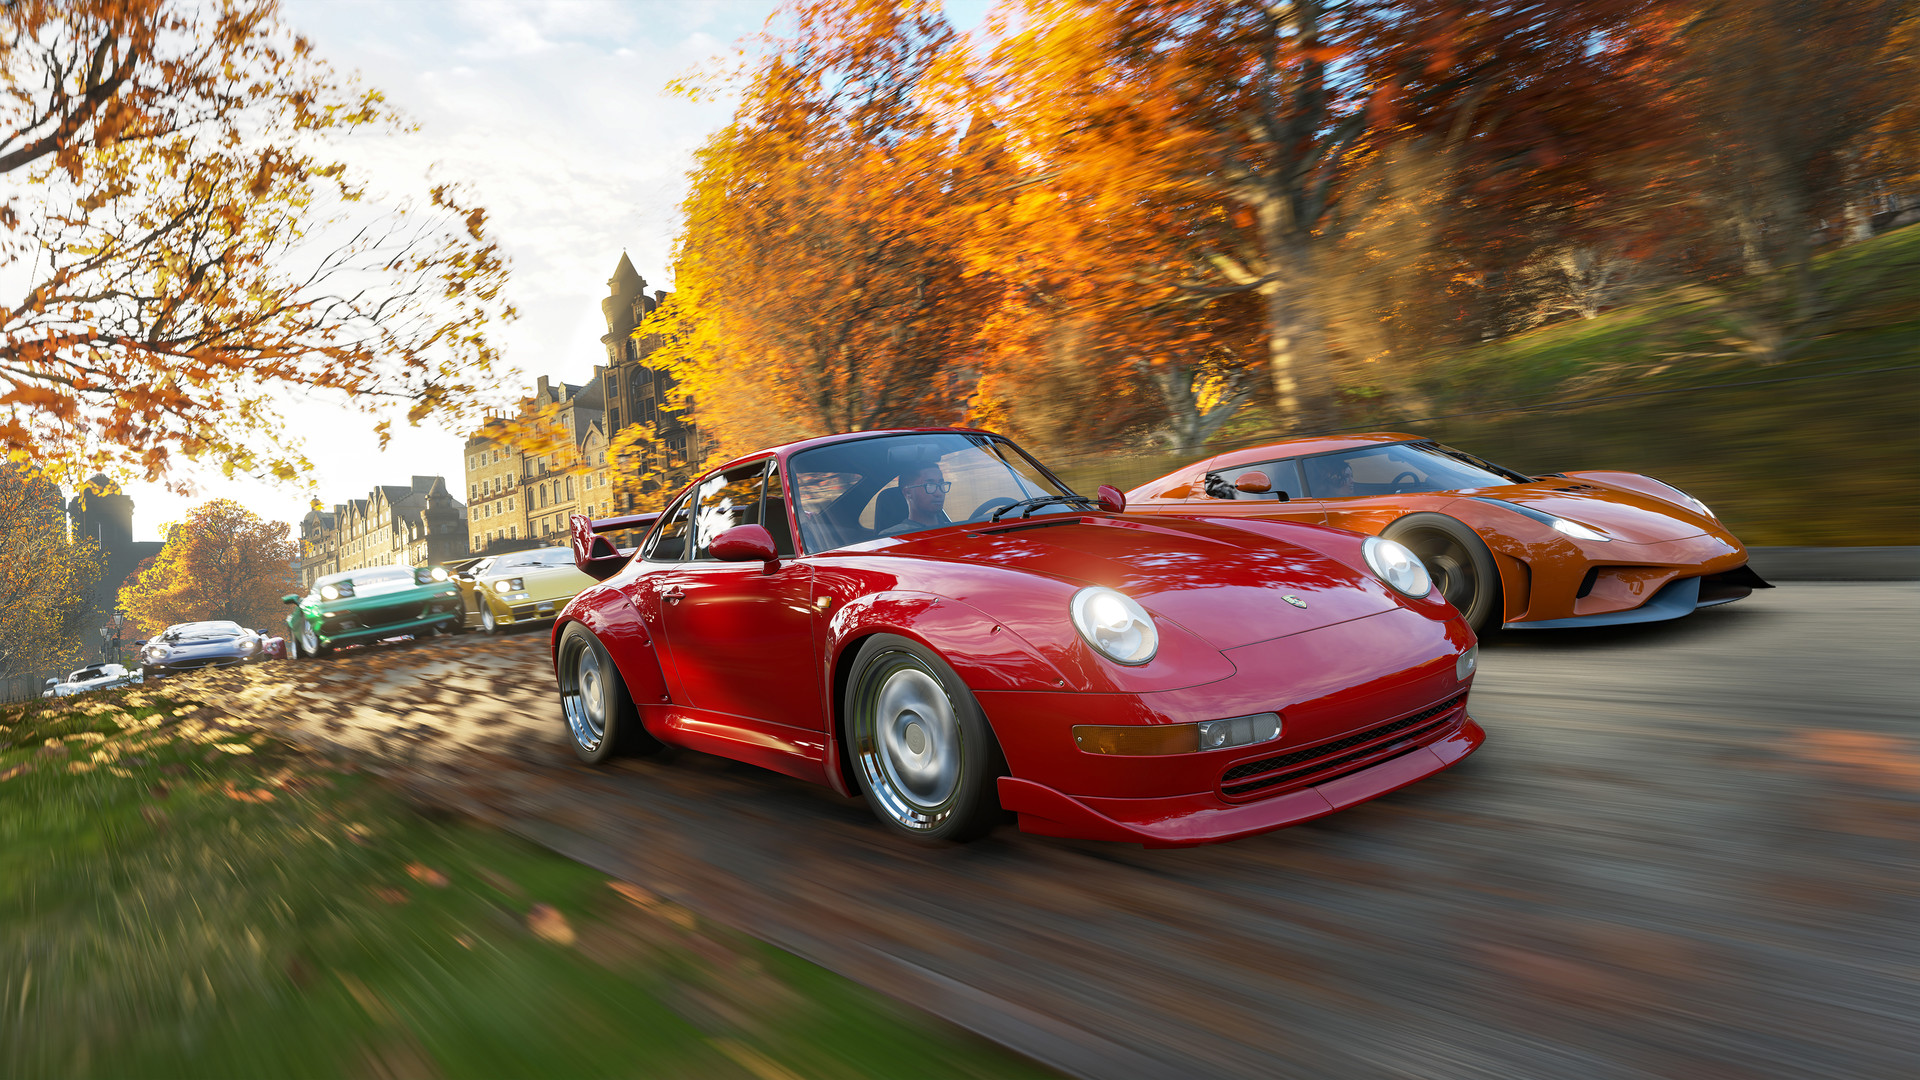 Save 67% on Forza Horizon 4 on Steam